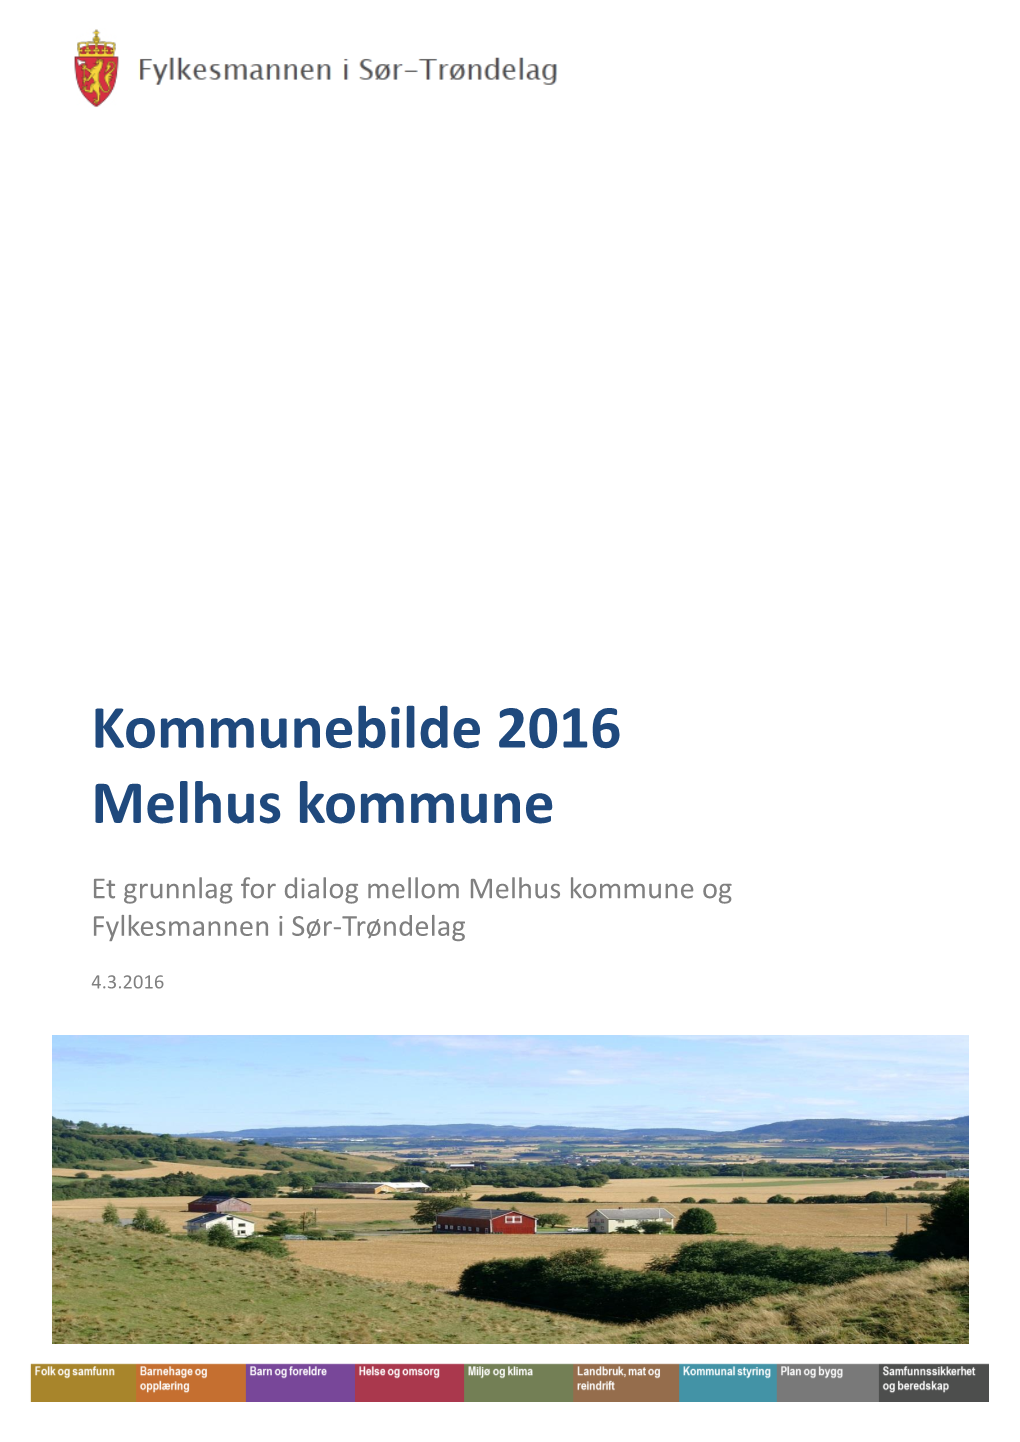 Kommunebilde 2016 Melhus Kommune